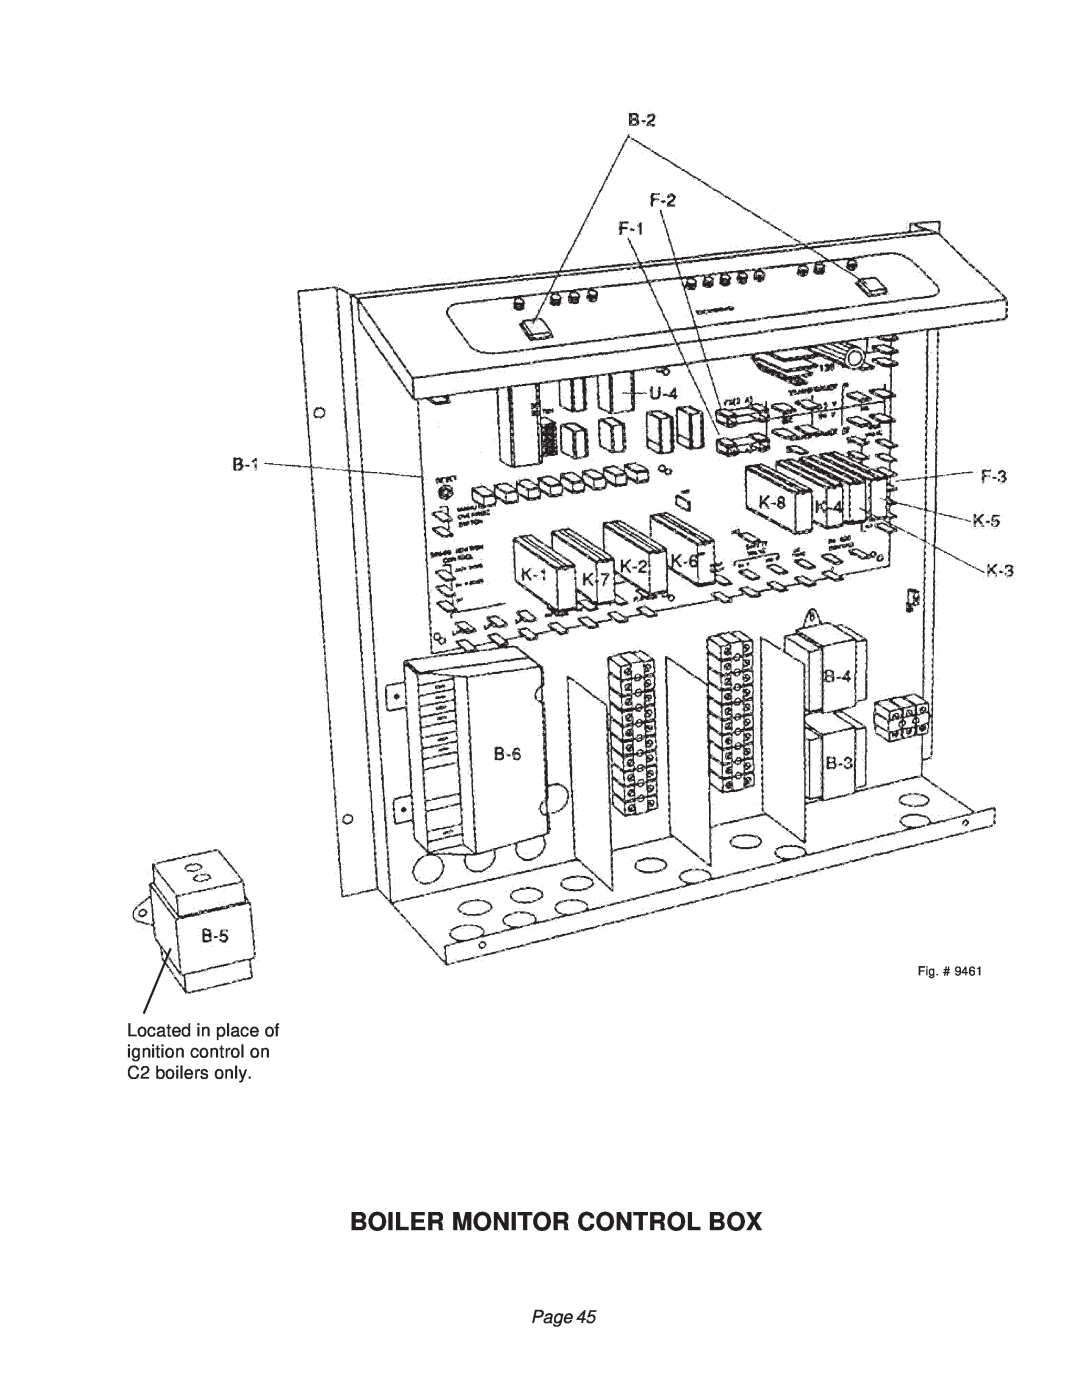 Raypak B6000 manual Boiler Monitor Control Box, Fig. # 